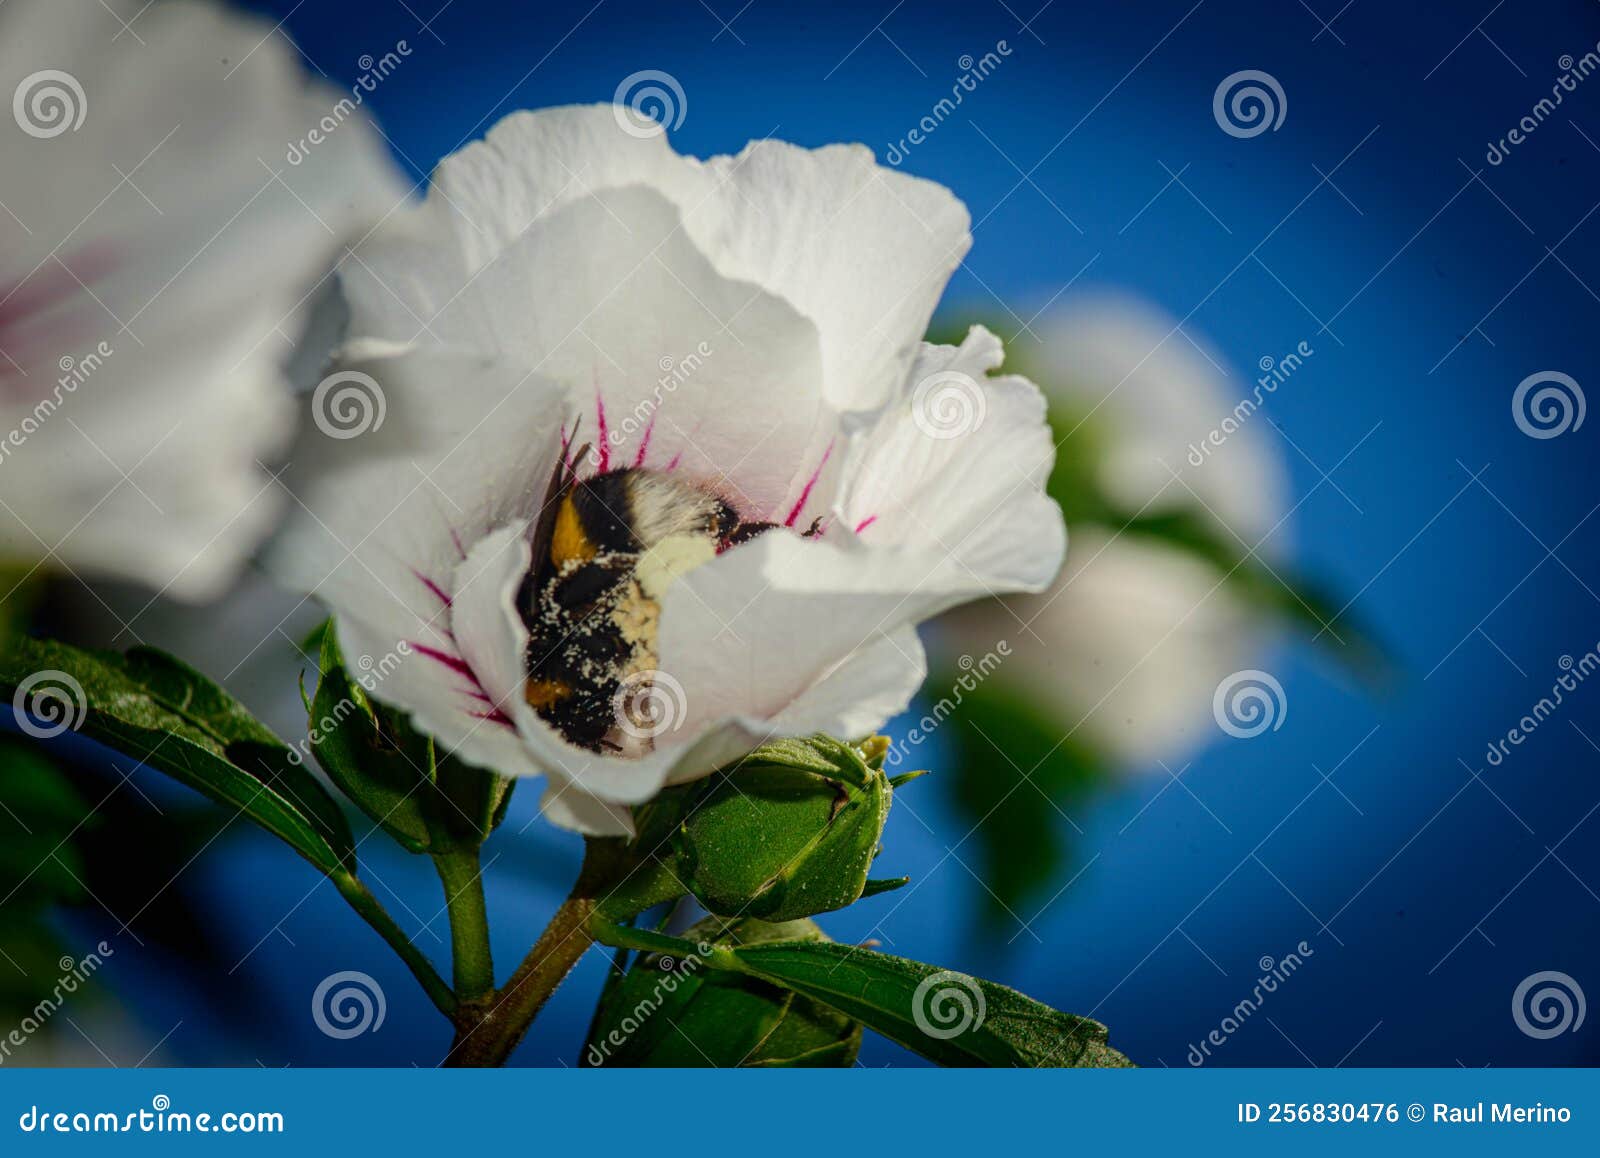 abeja dentro de la flor